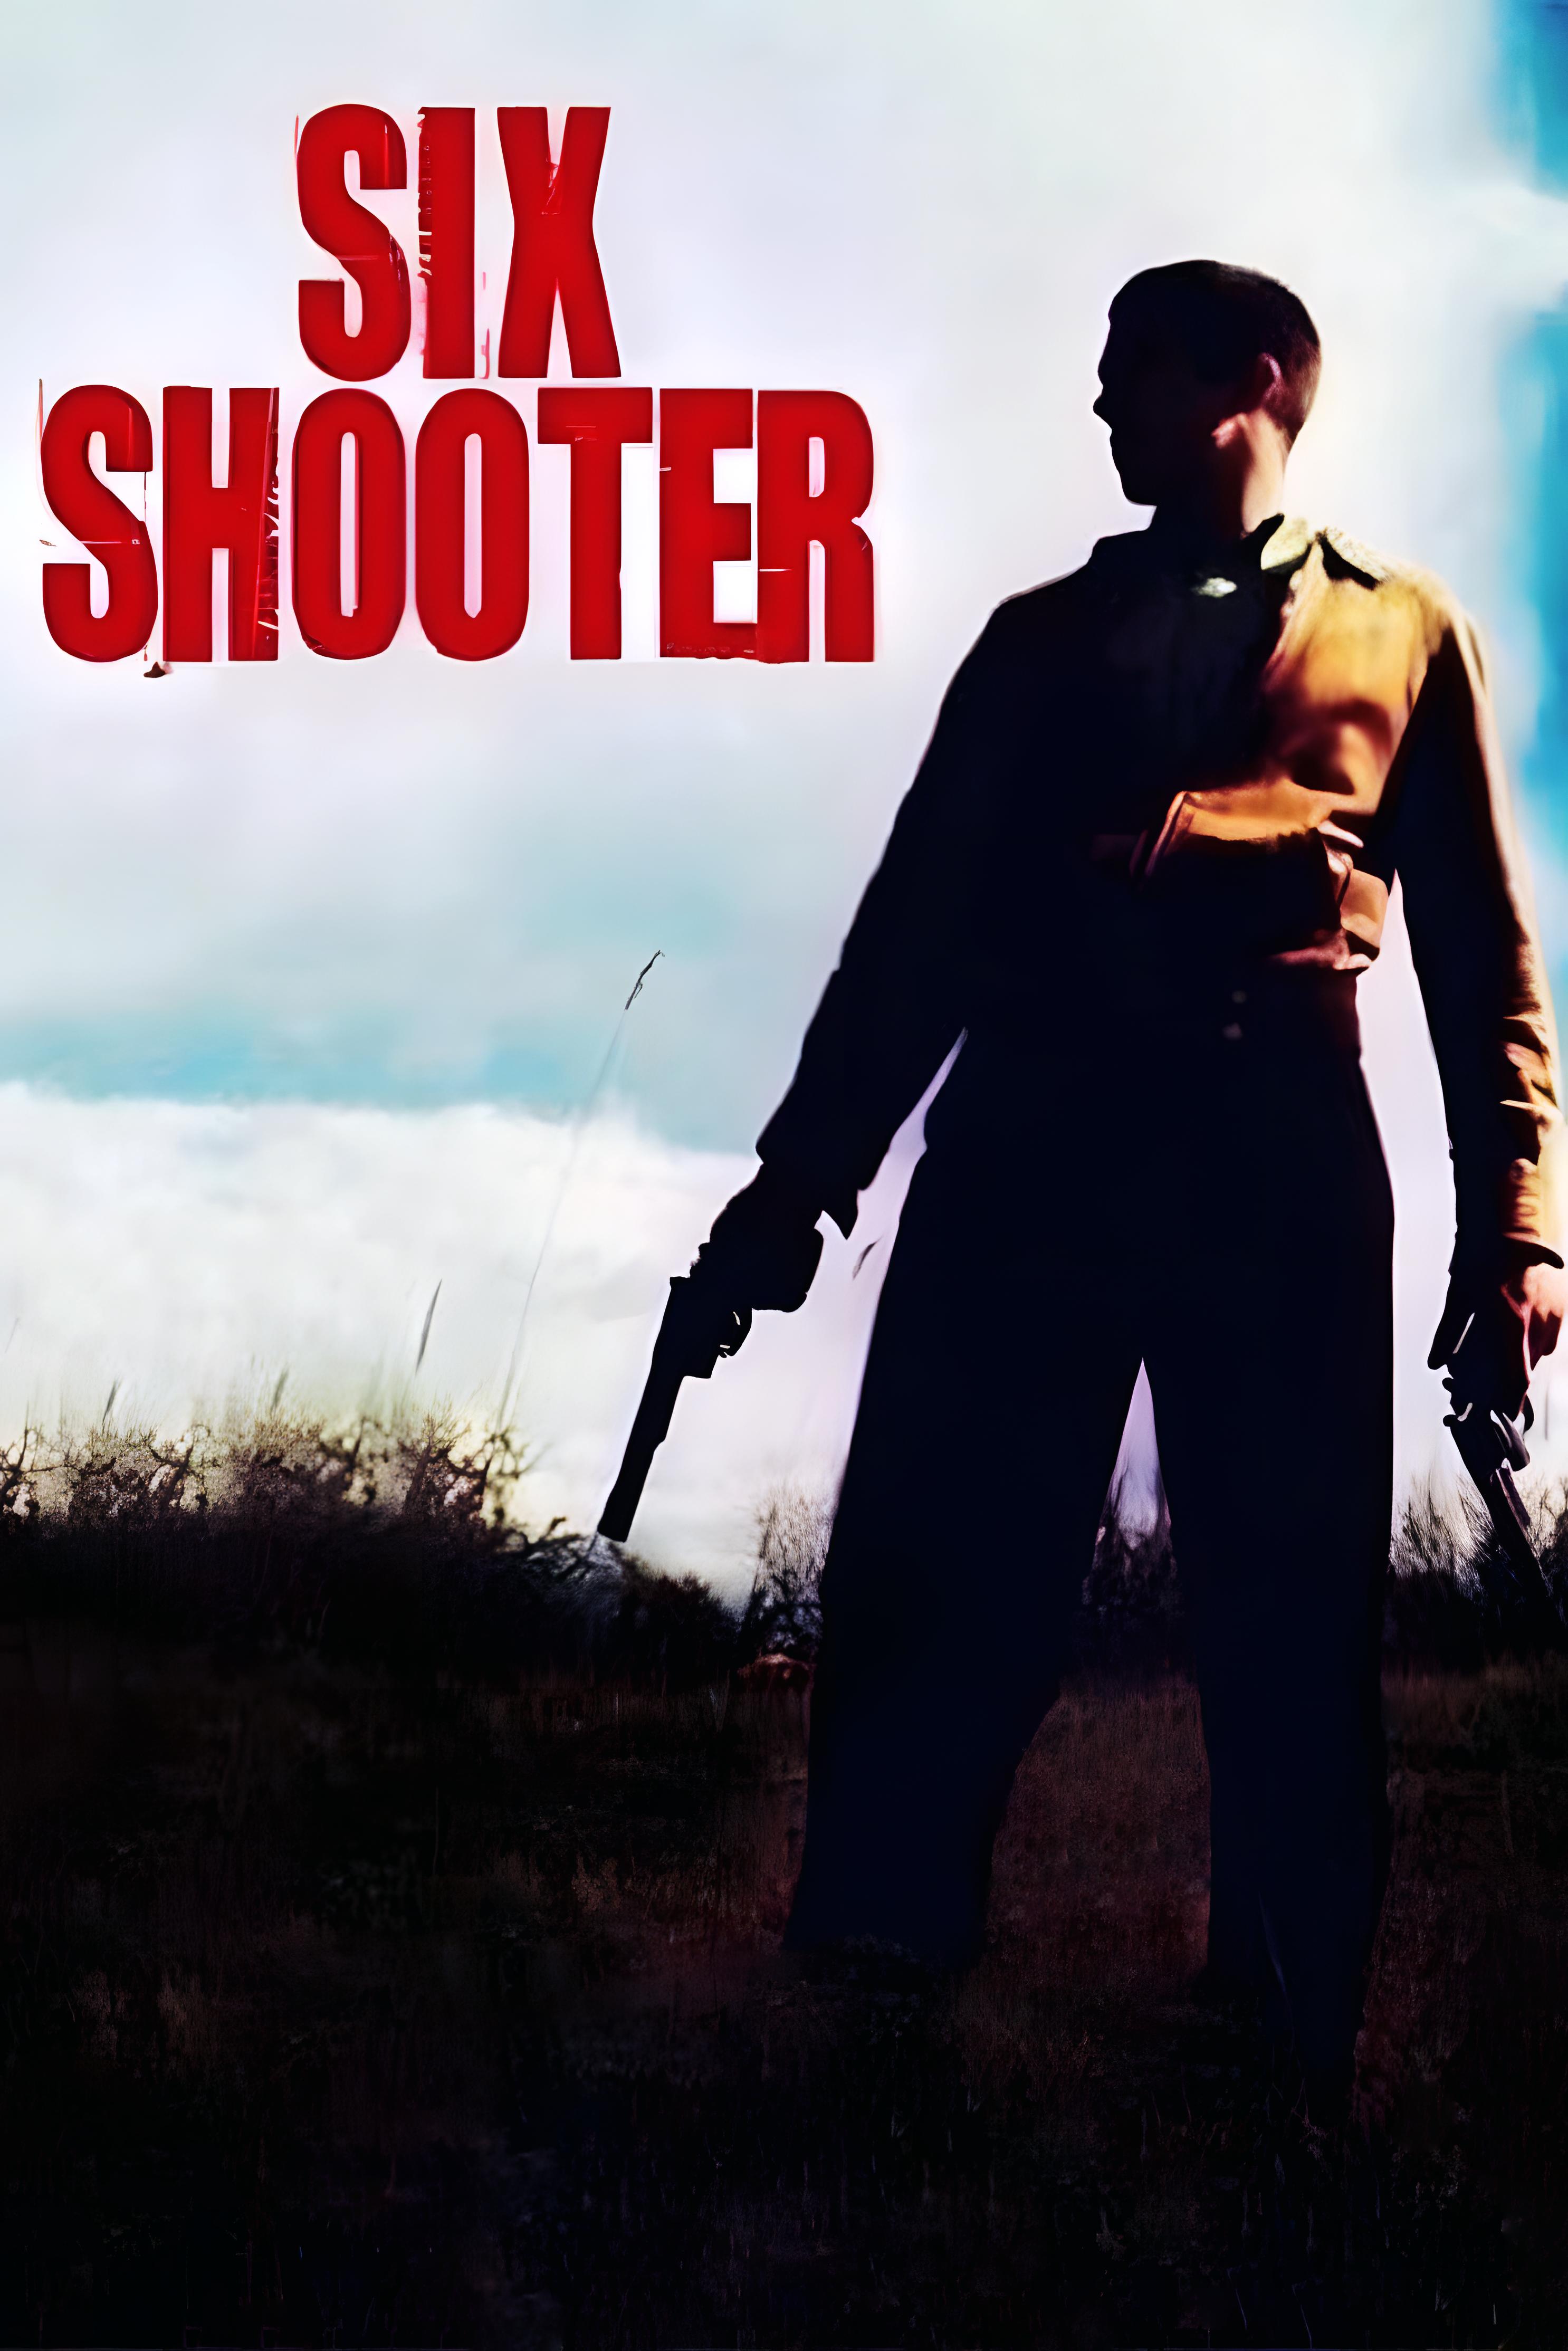 shooter movie imdb